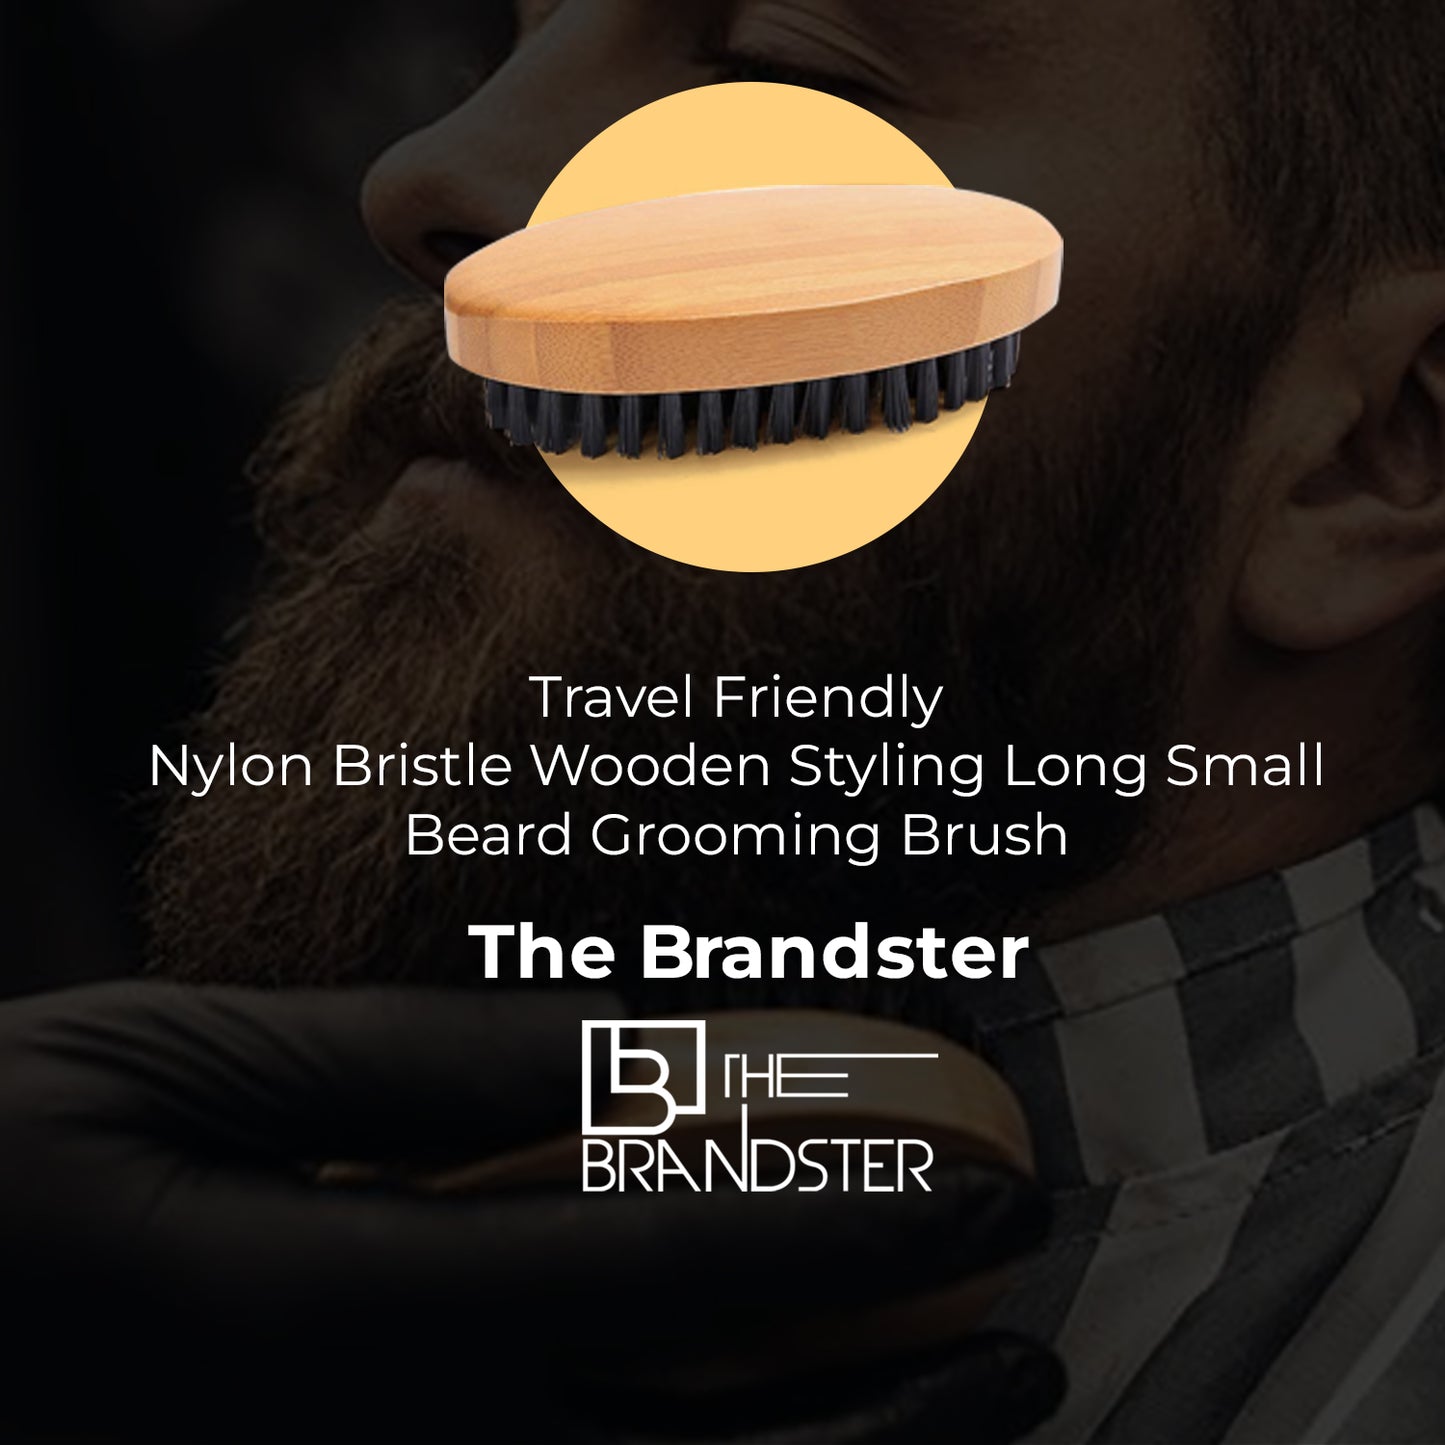 Travel Friendly Wooden Beard Brush Nylon Bristle for Grooming Your Facial Hair